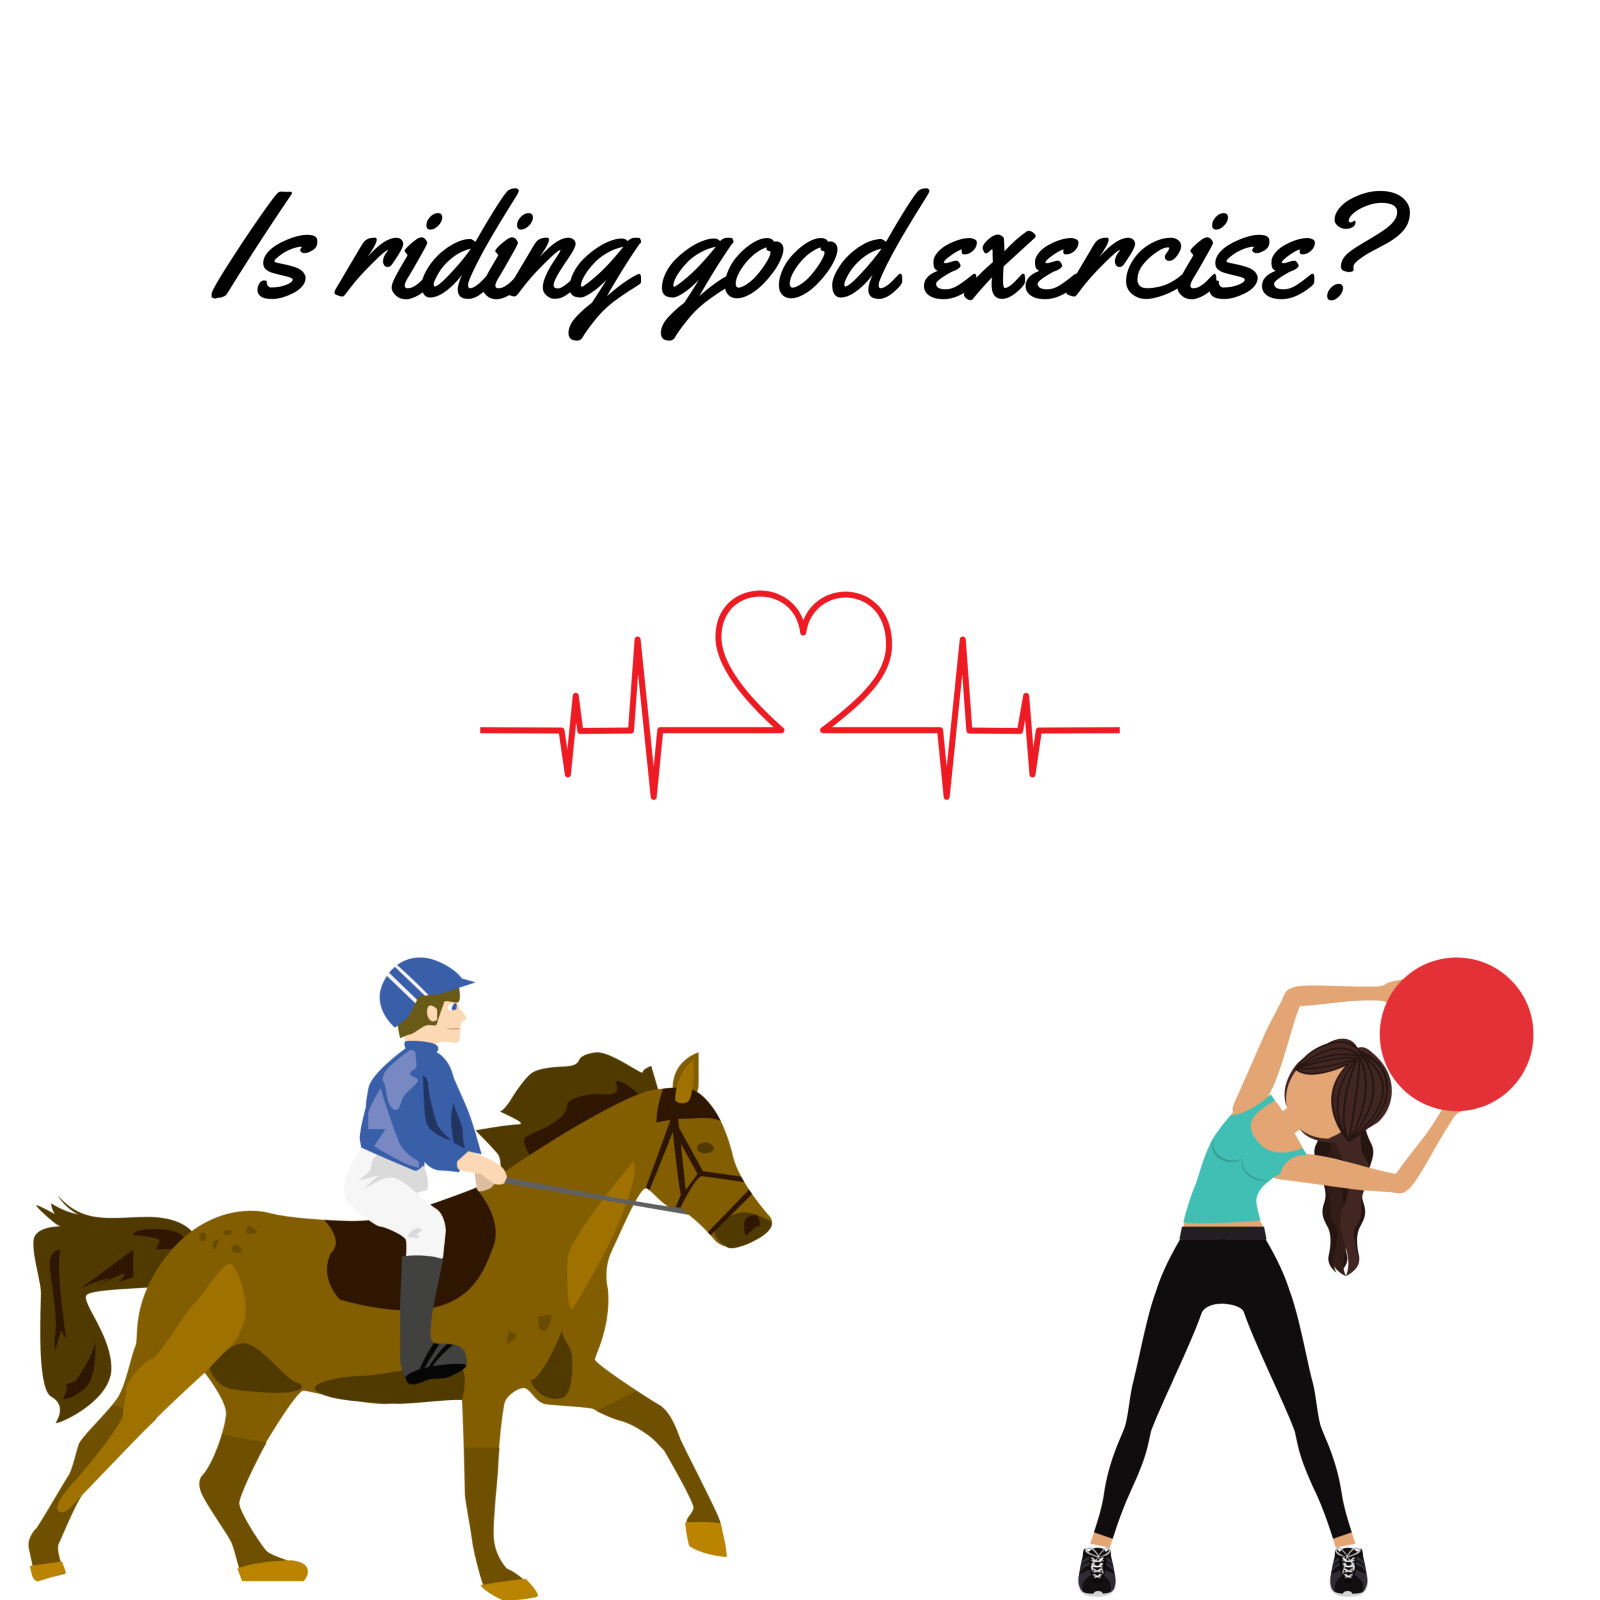 Is horseback riding good exercise?